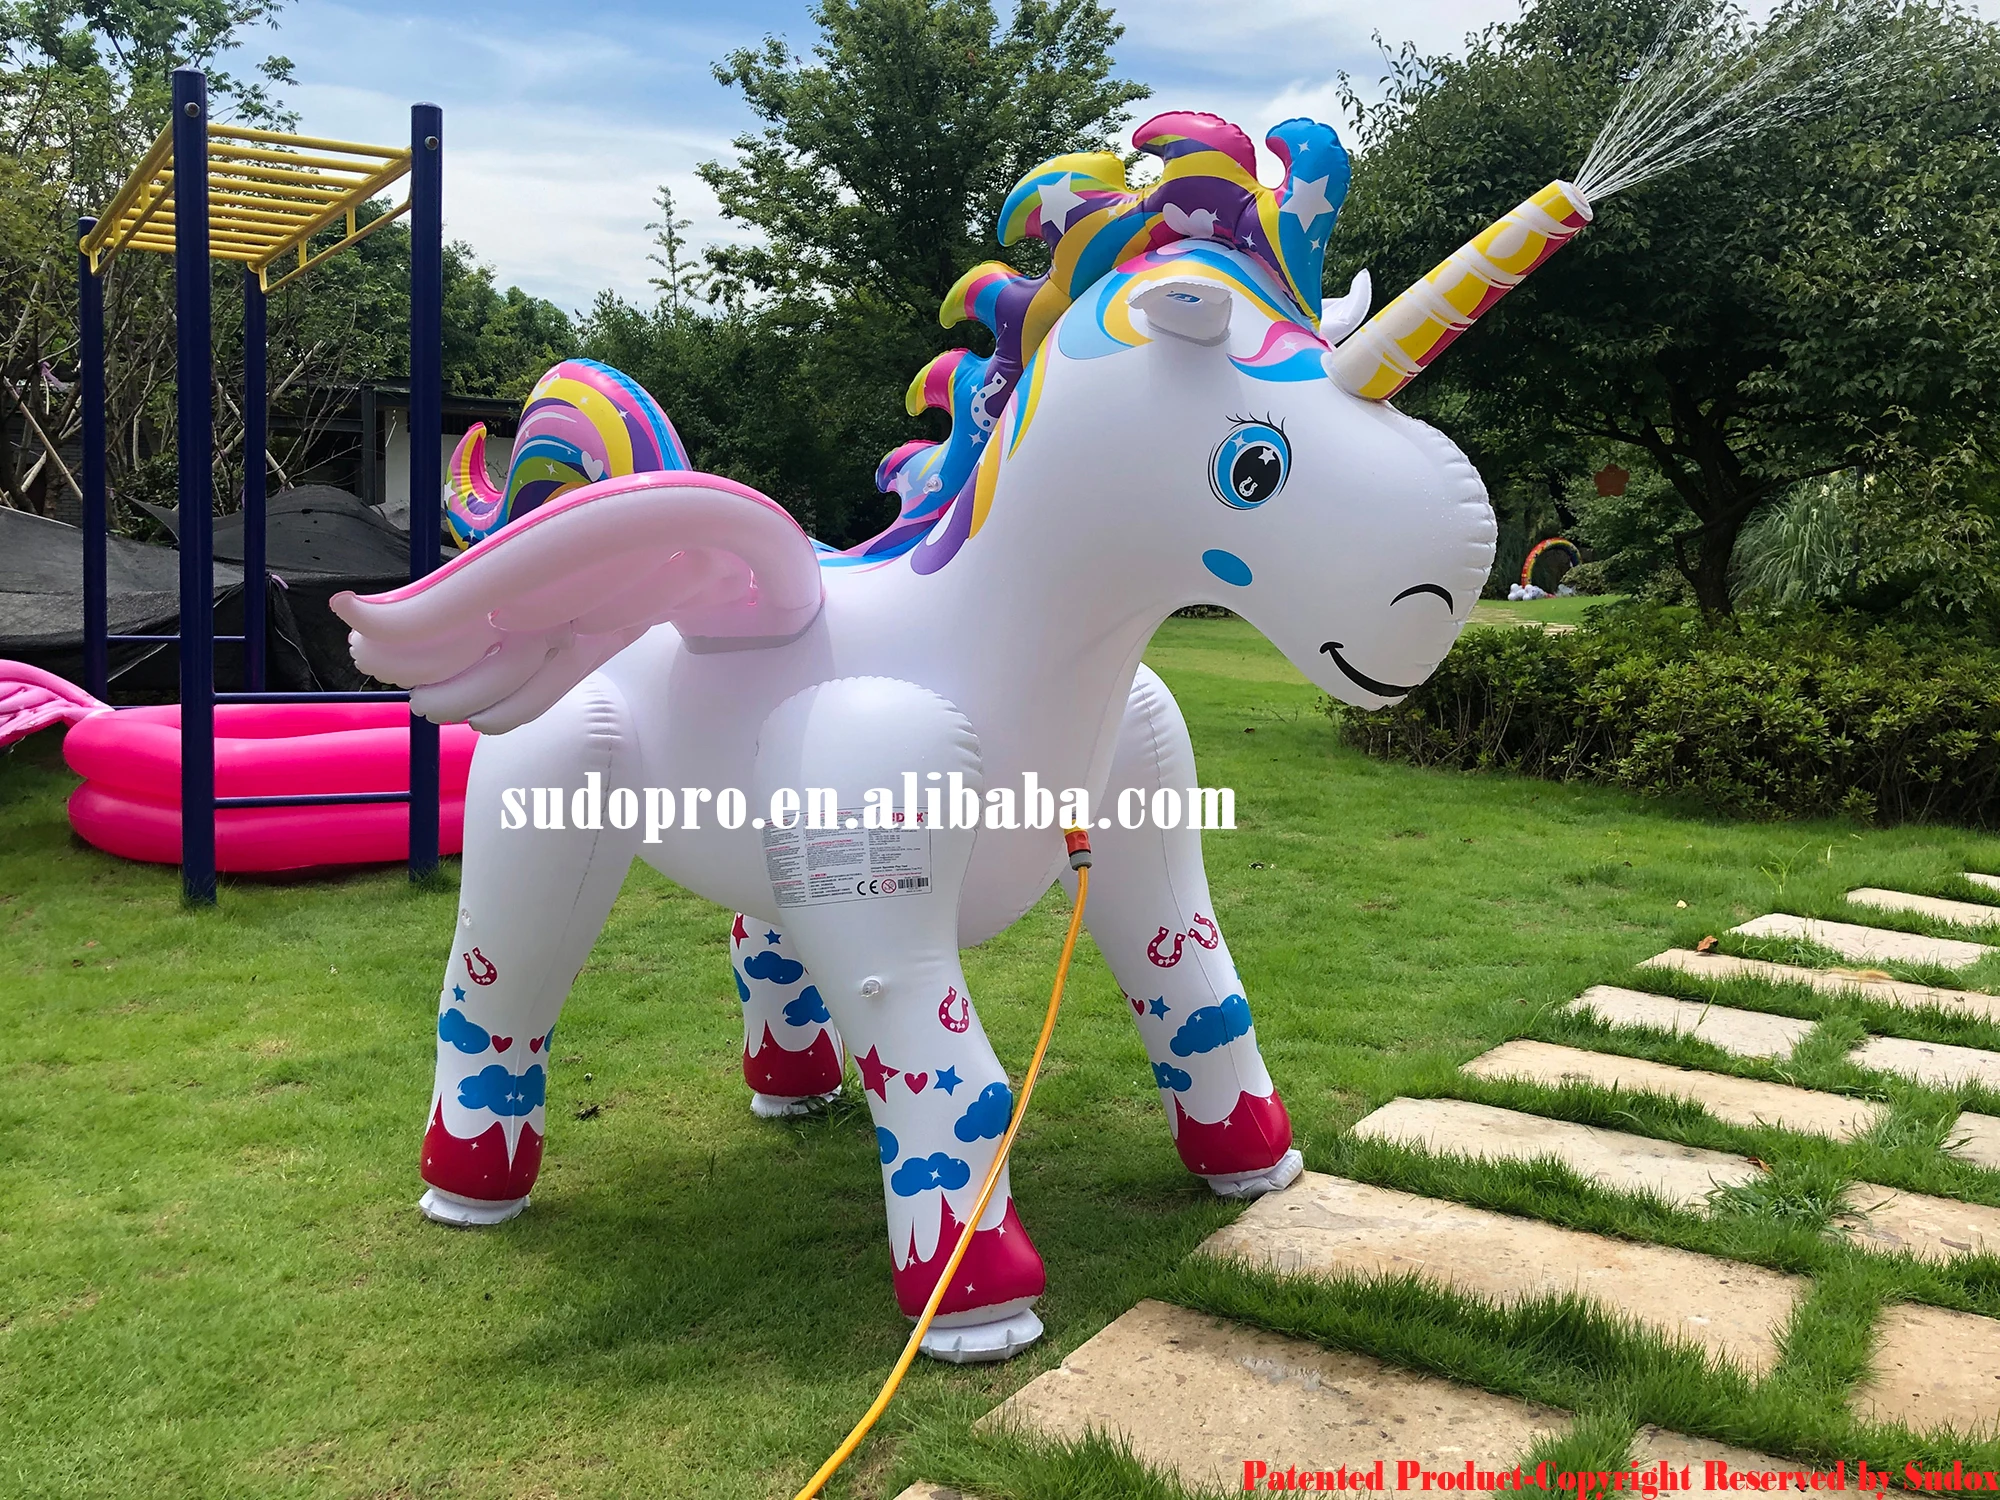 
Sudox SDX0002 stock 213x153x167cm inflatable unicorn spray splash backgarden back yard sprinkler water game pool squirt toys 